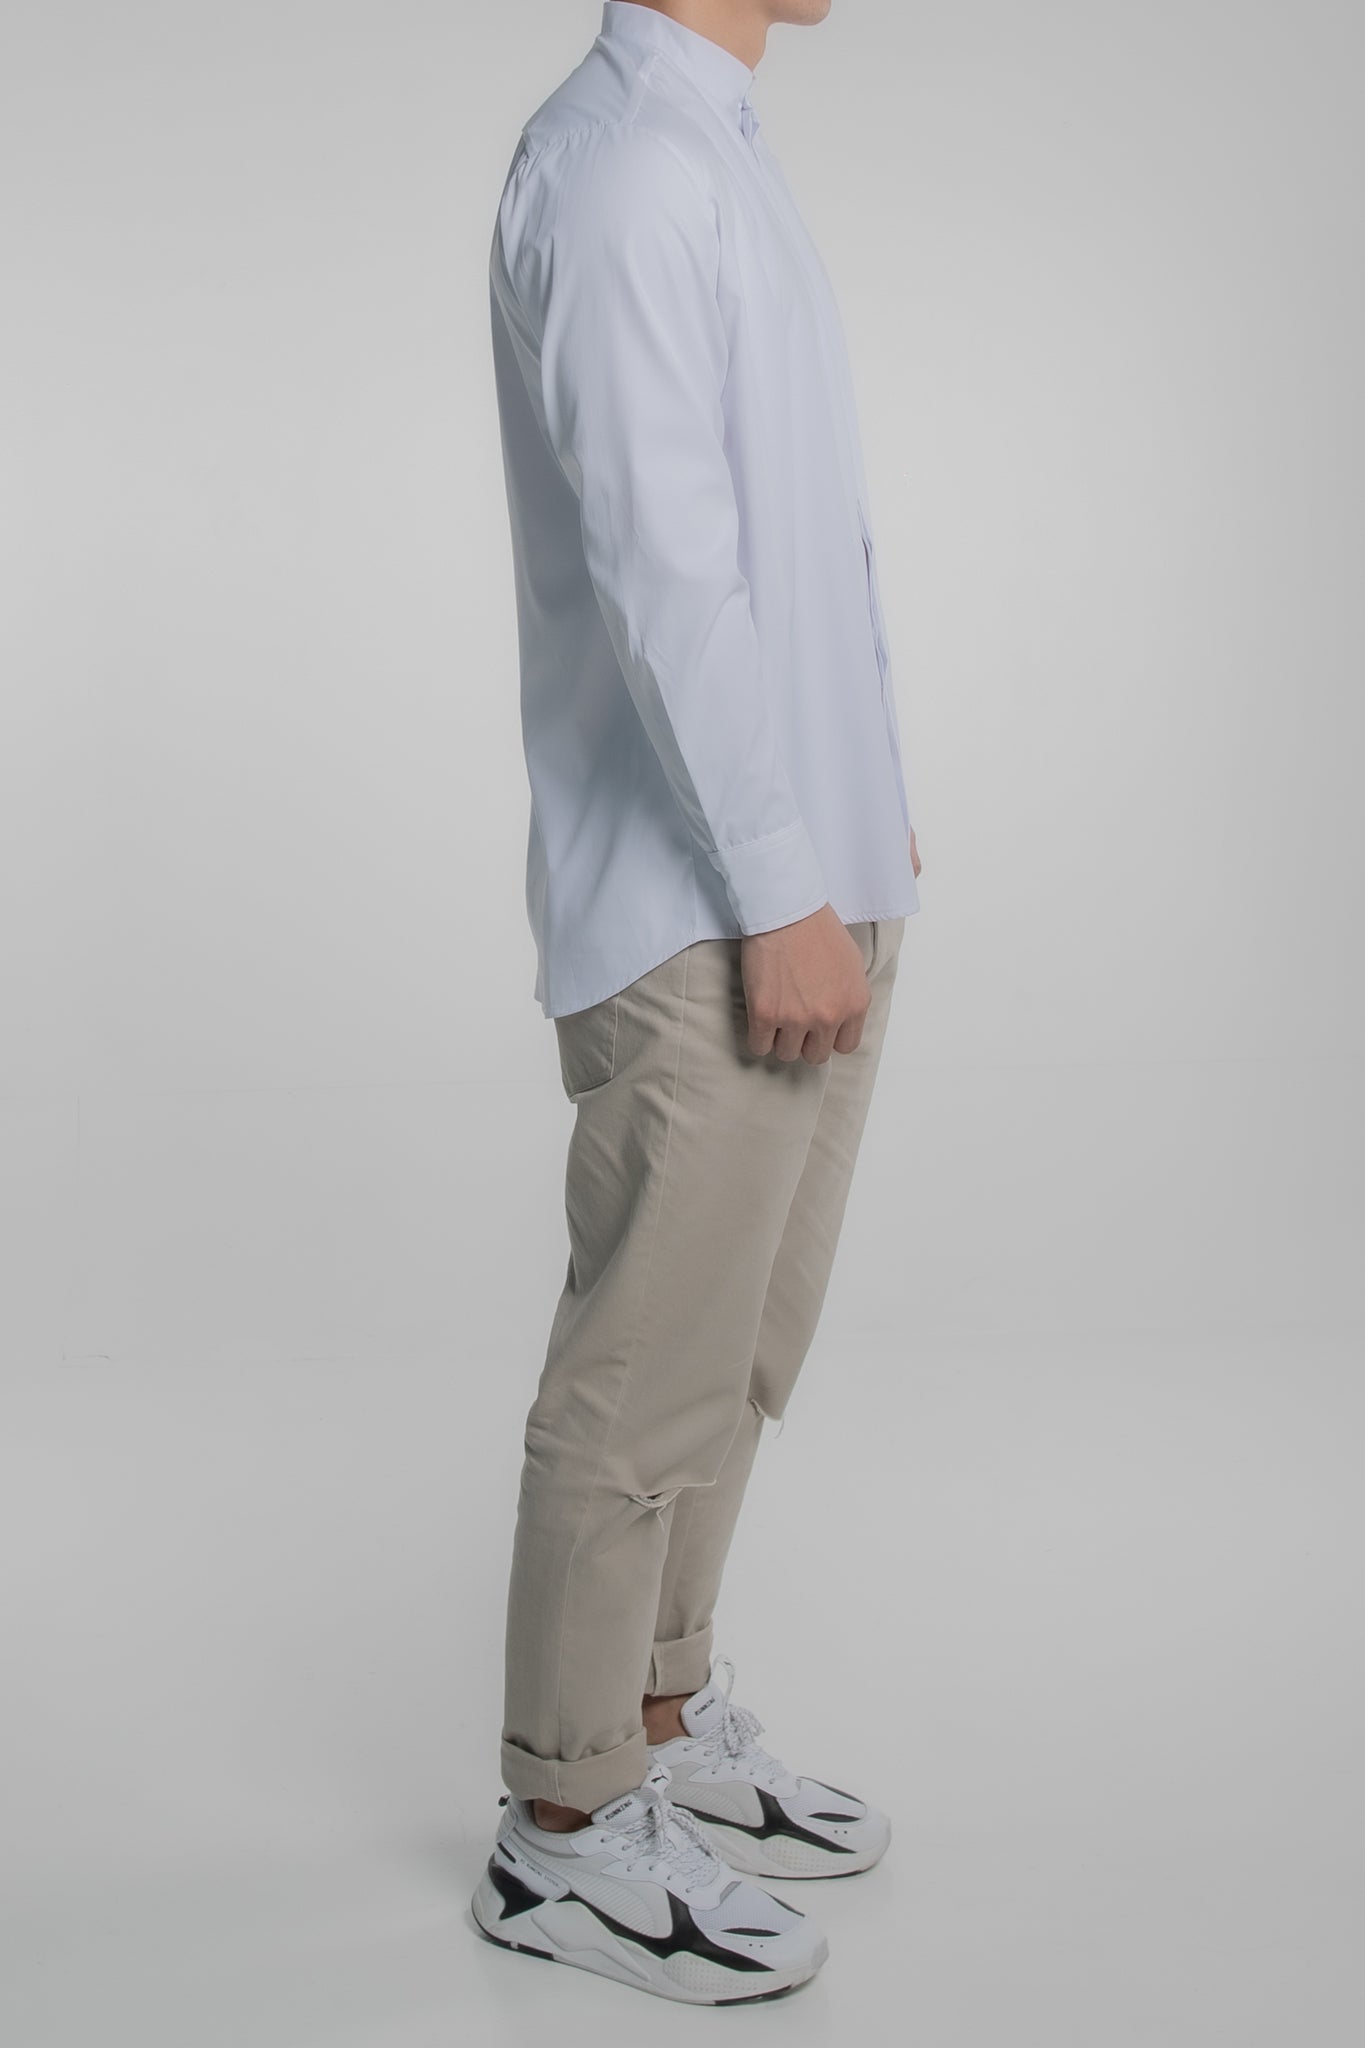 Grandad Collar Long Sleeves (White)